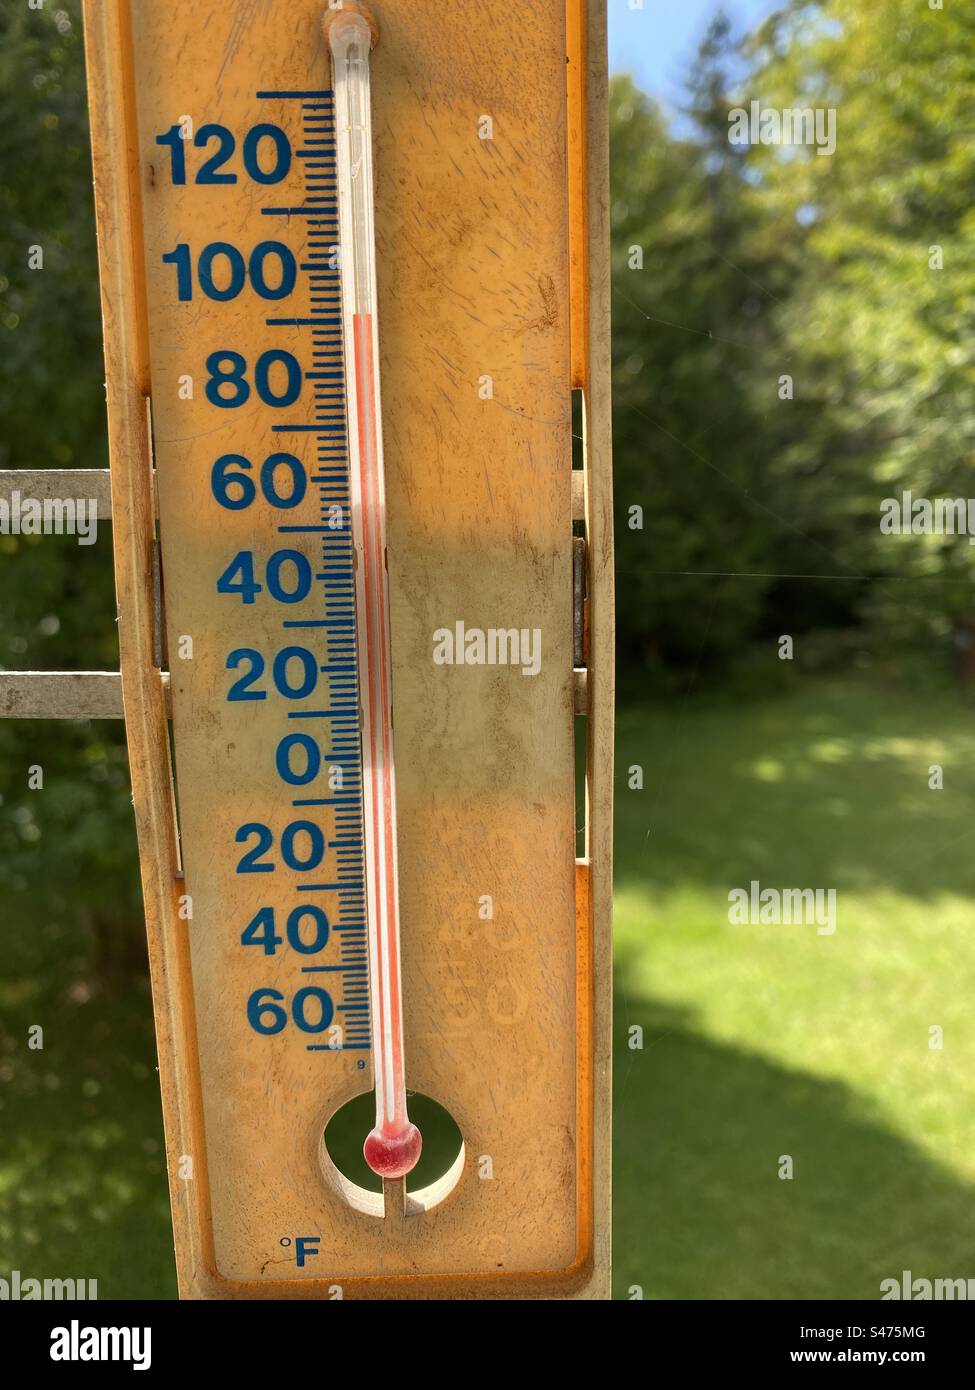 https://c8.alamy.com/comp/S475MG/outdoor-mercury-thermometer-S475MG.jpg